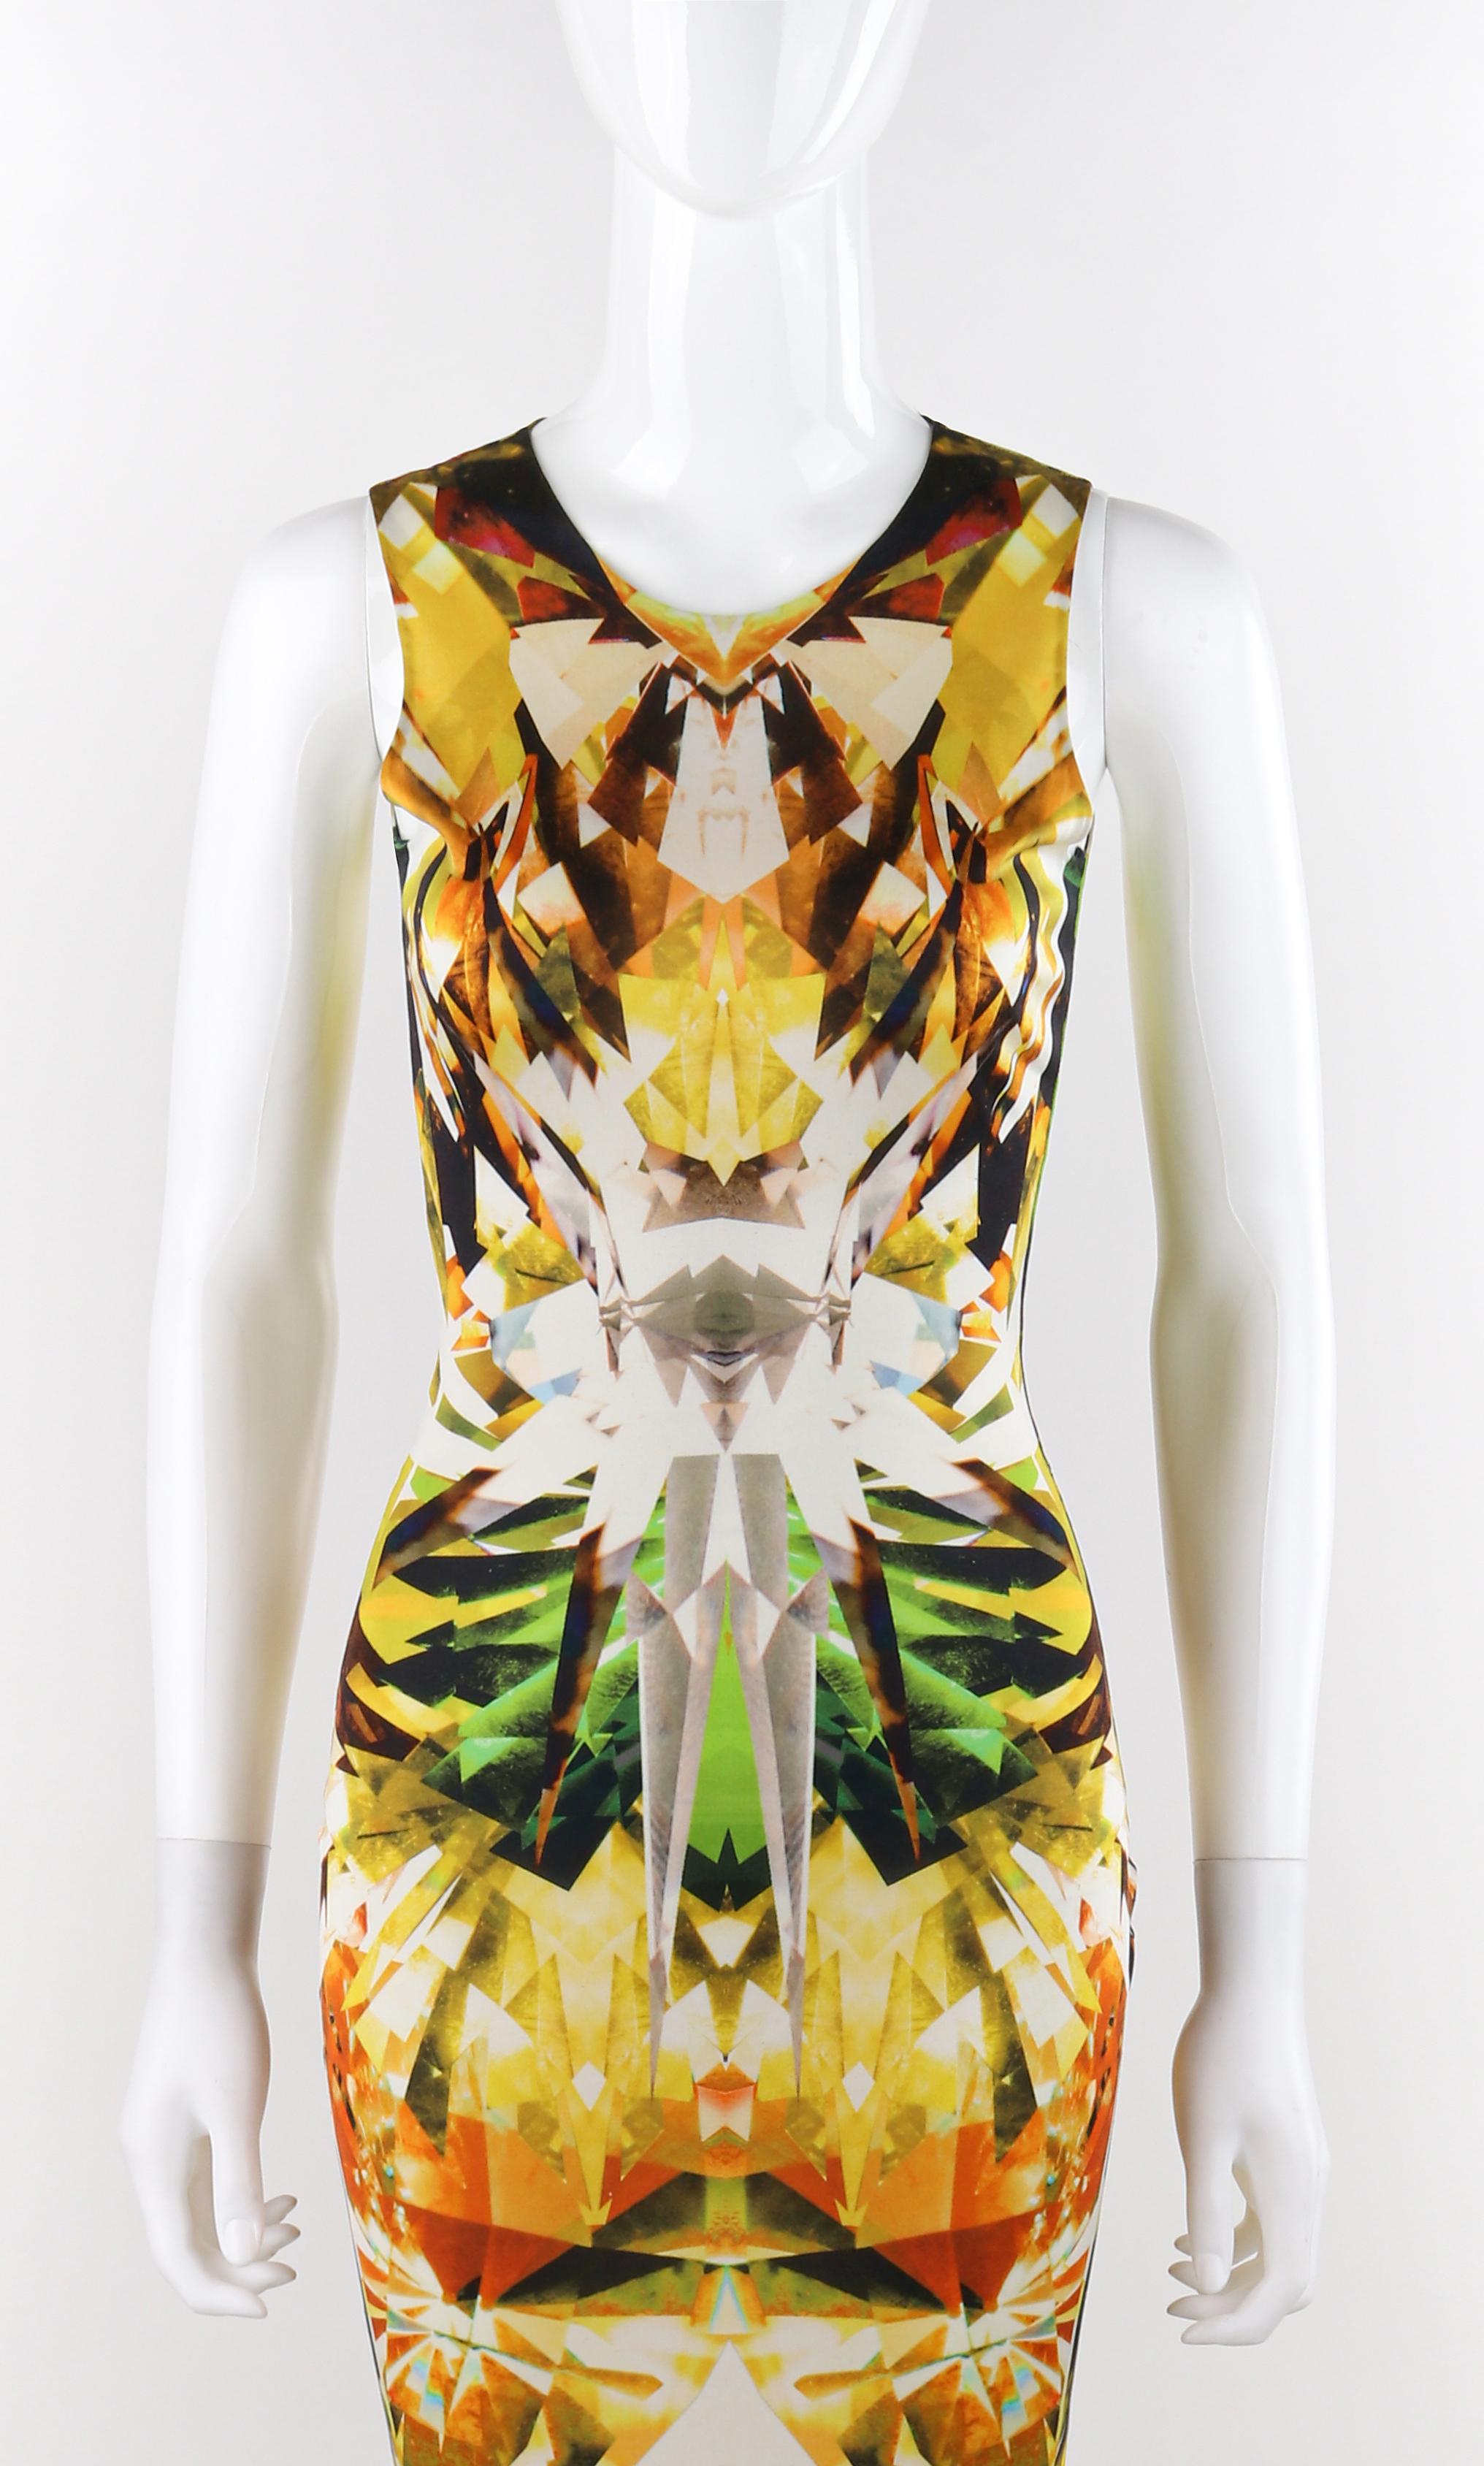 One of a Kind - SAMPLE

ALEXANDER McQUEEN S/S 2009 “Natural Distinction” Crystal Kaleidoscope Maxi Dress
 
Brand / Manufacturer: Alexander McQueen
Collection: S/S 2009 “Natural Dis-tinction”
Designer: Alexander McQueen 
Style: Maxi dress/